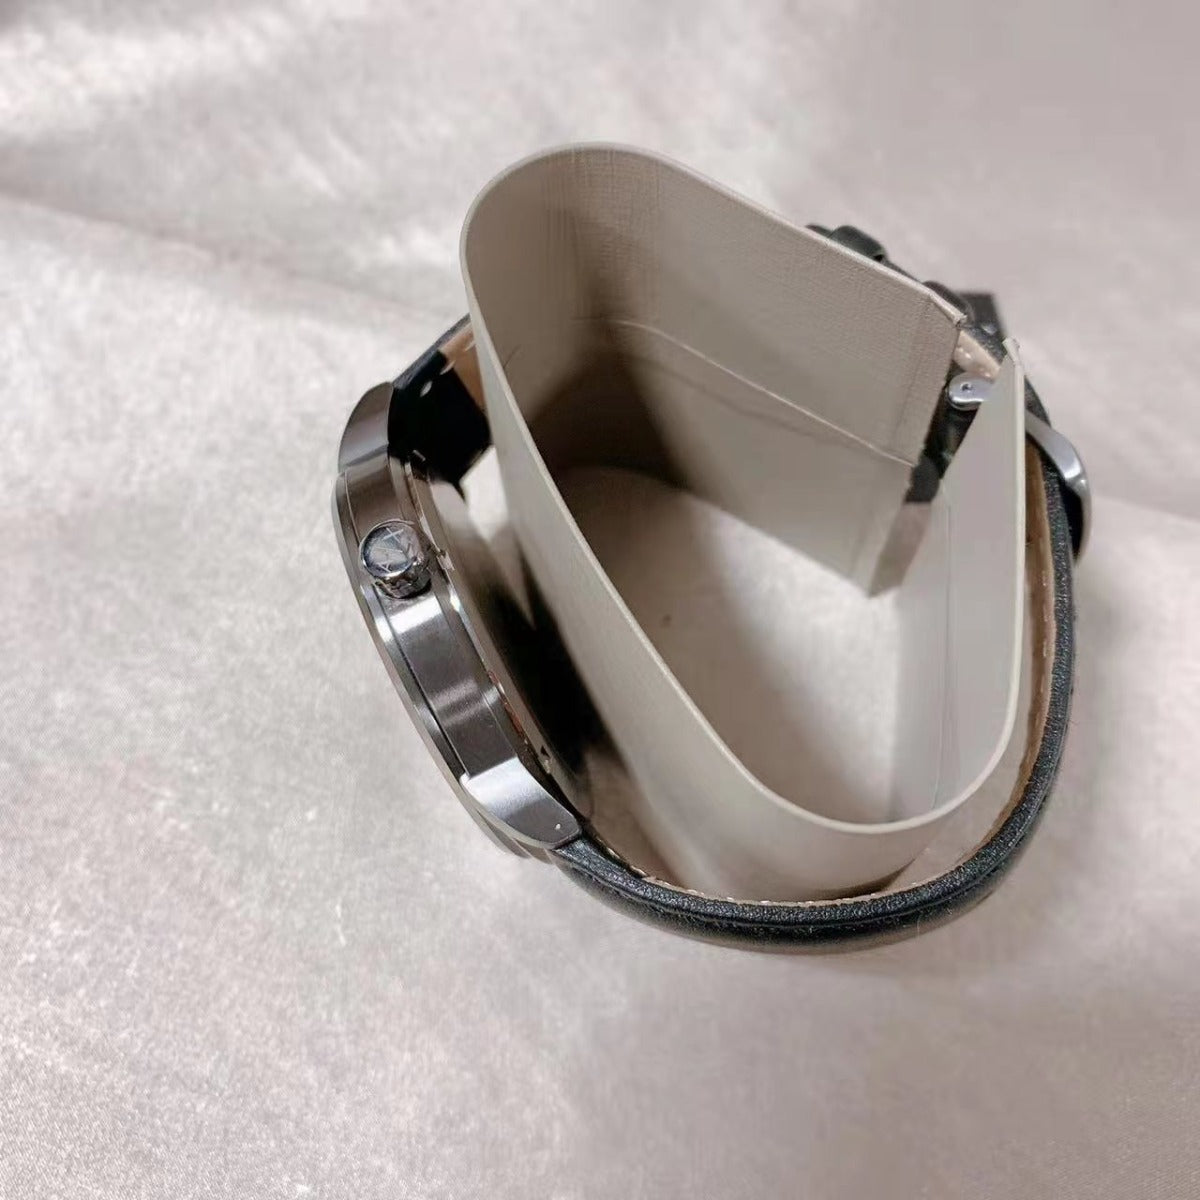 Armani Exchange AX1473 Three-Hand Date Black Leather Watch - 723763281256